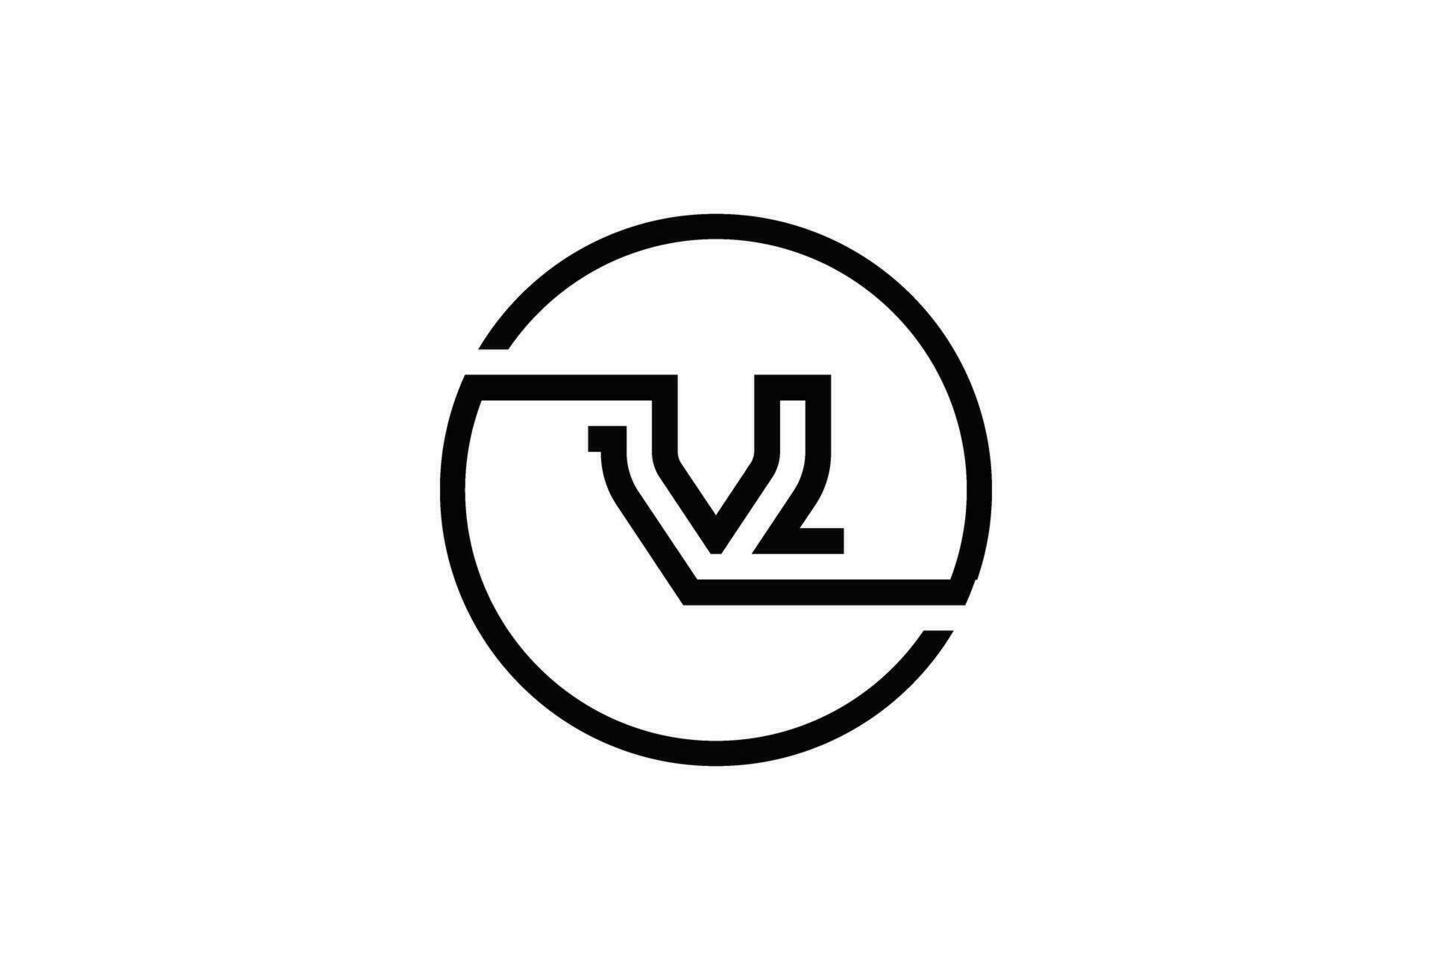 lettre v affaires moderne logo vecteur